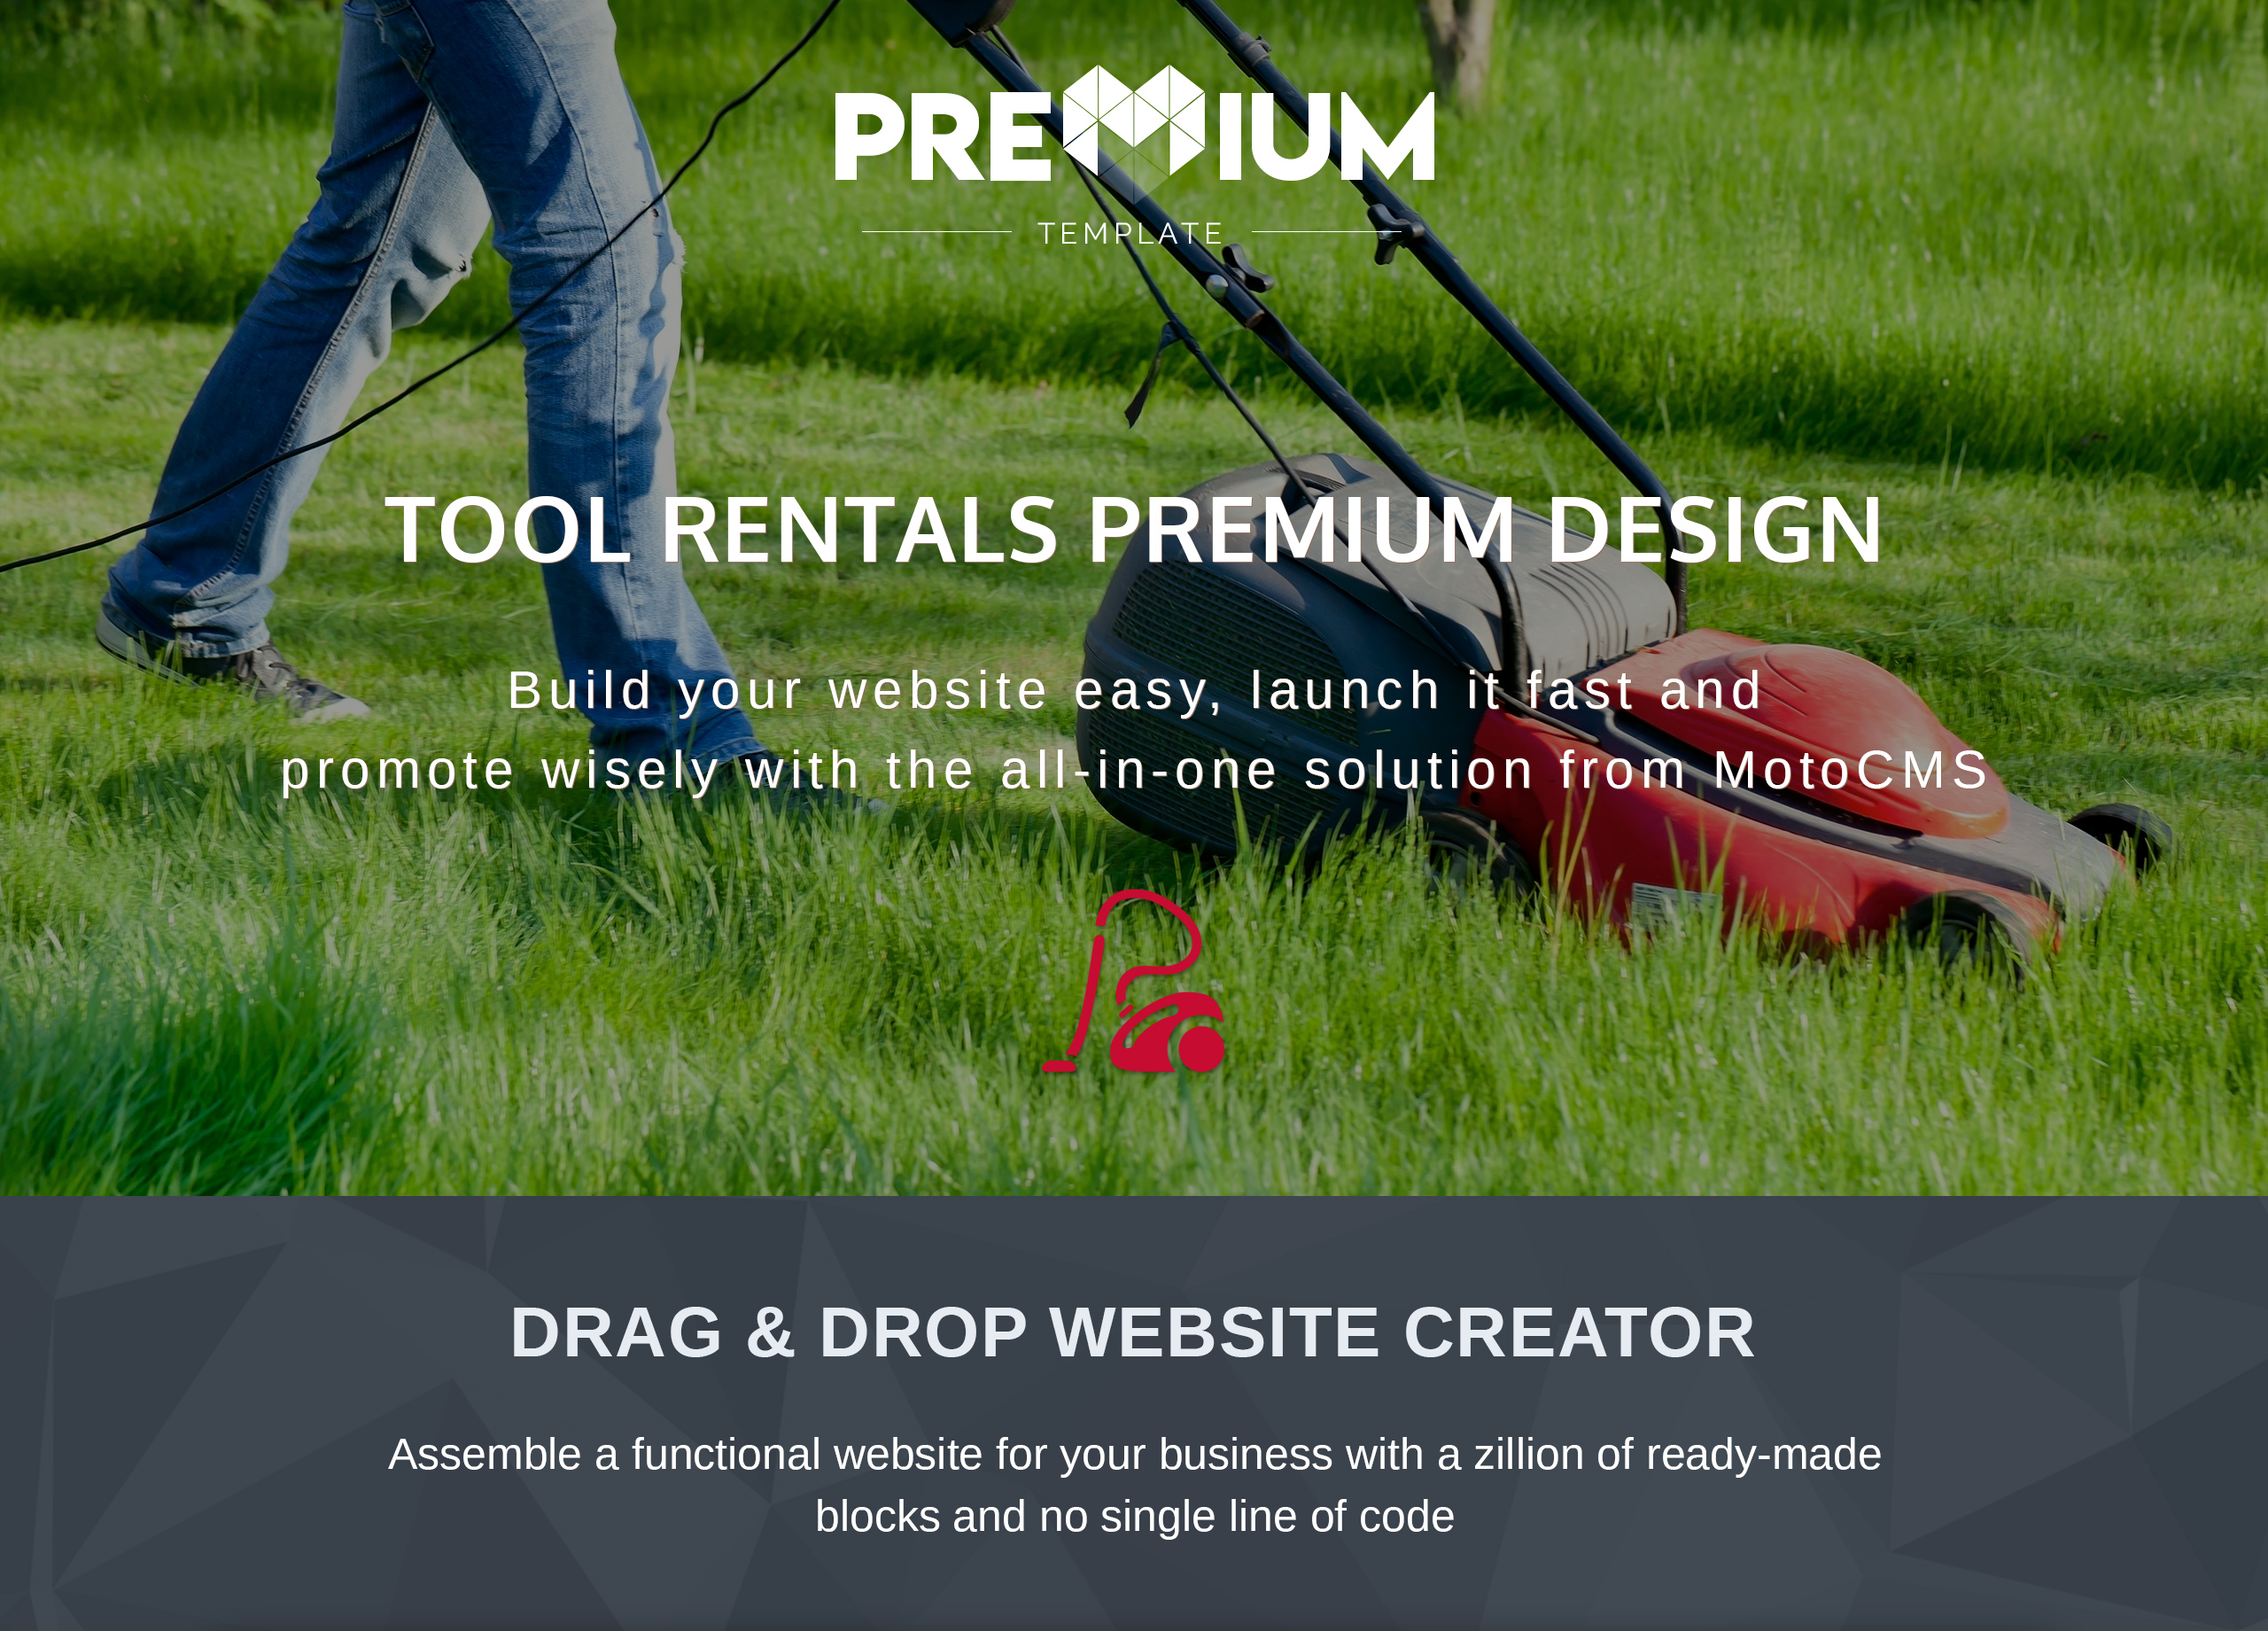 equipment-rental-website-template-for-tool-rentals-motocms